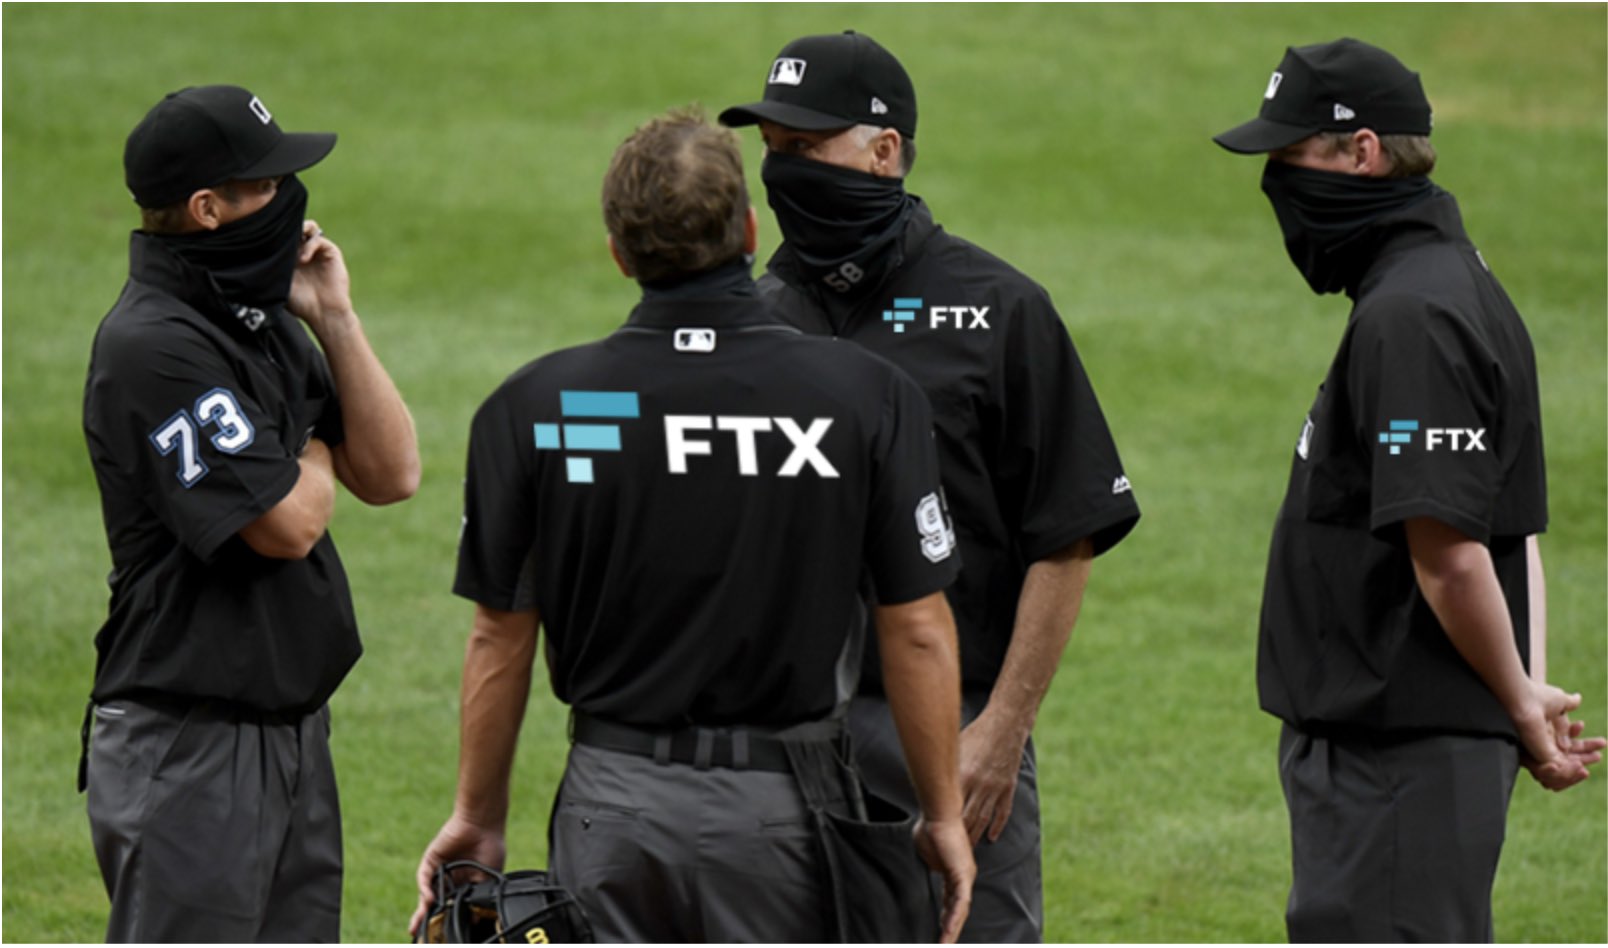 ftx umpire uniform